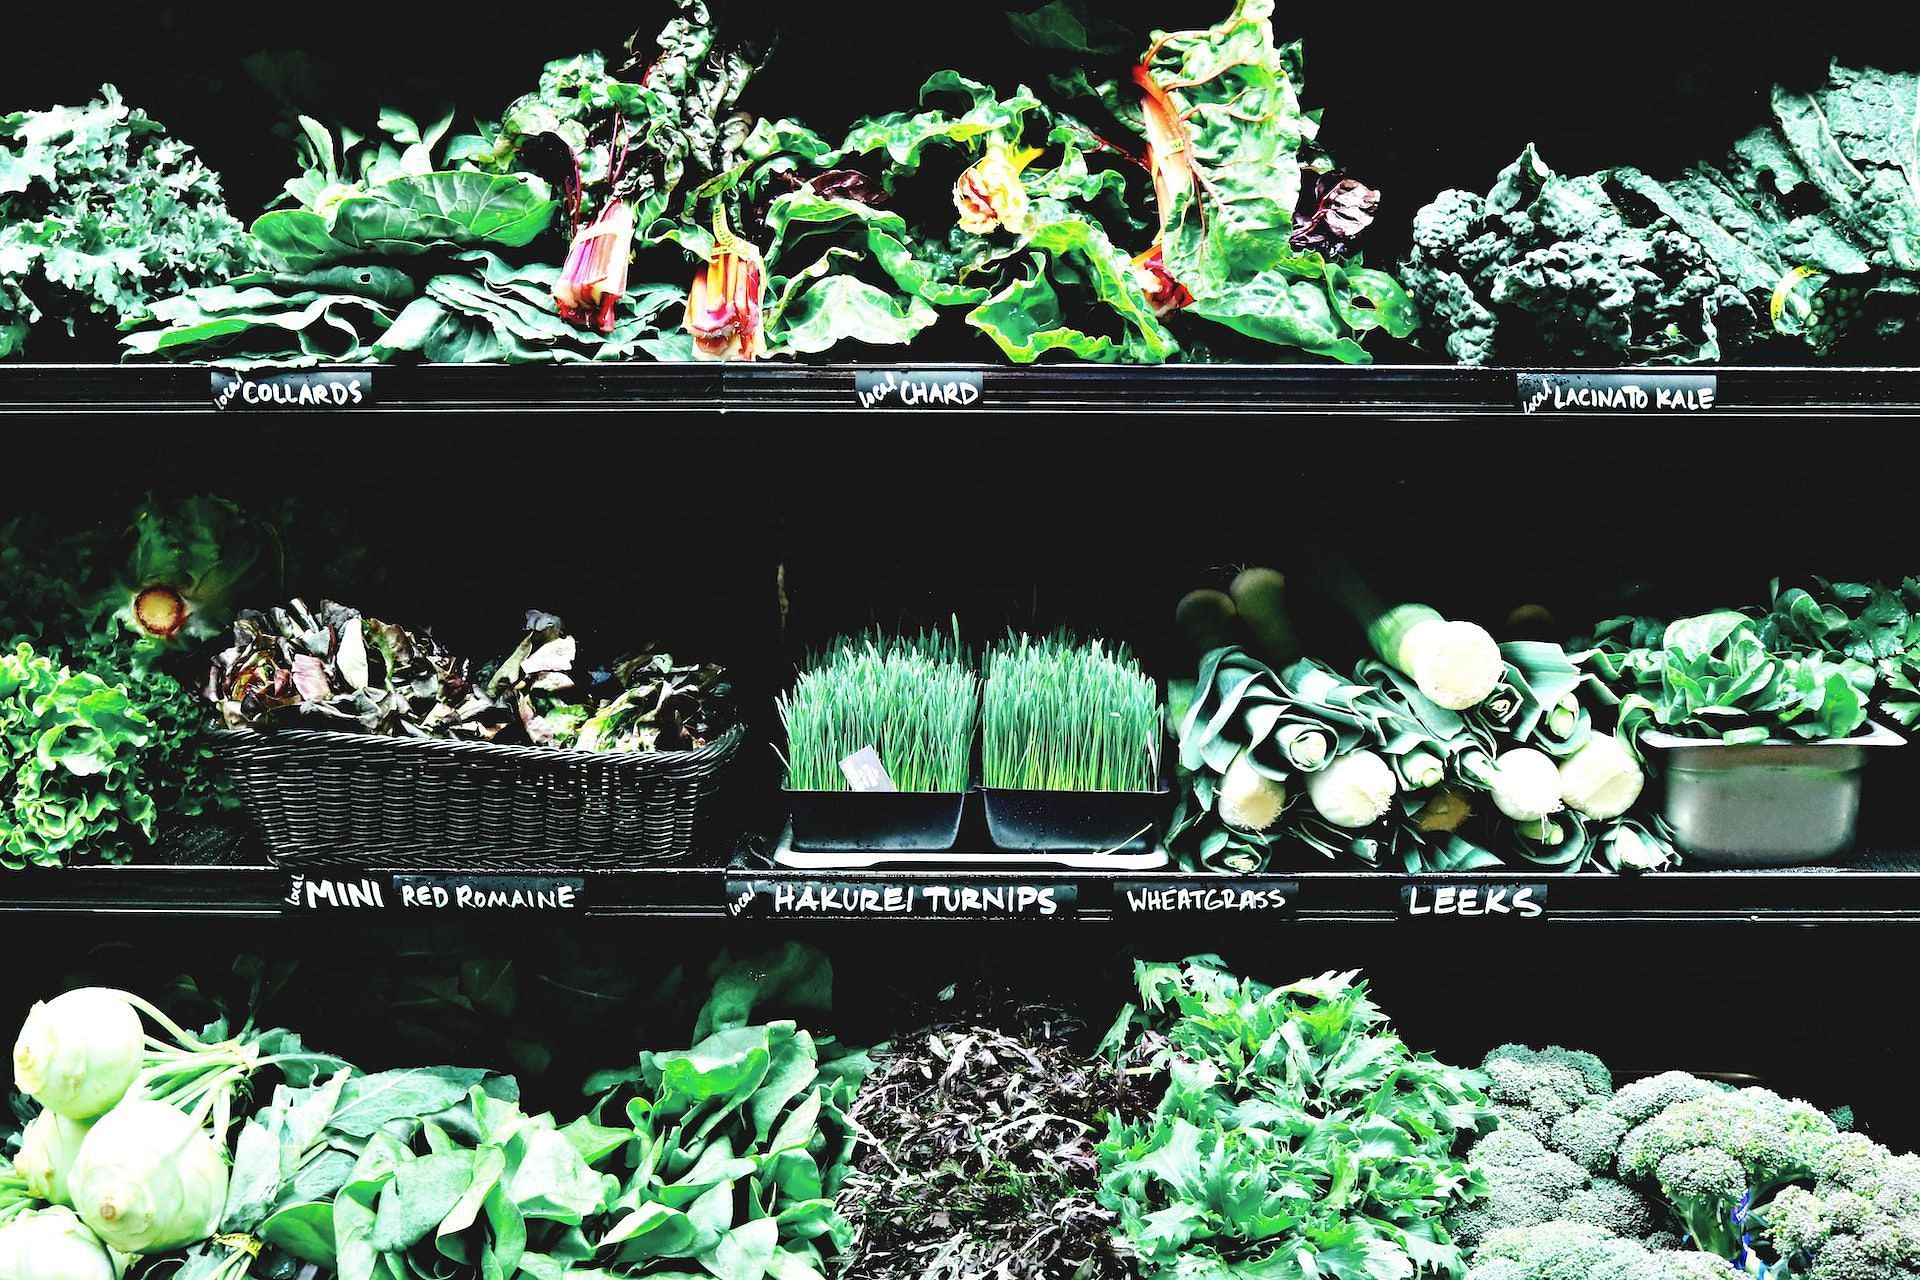 Cruciferous vegetables include broccoli, kale, and more. (Photo via Pexels/Madison Inouye)